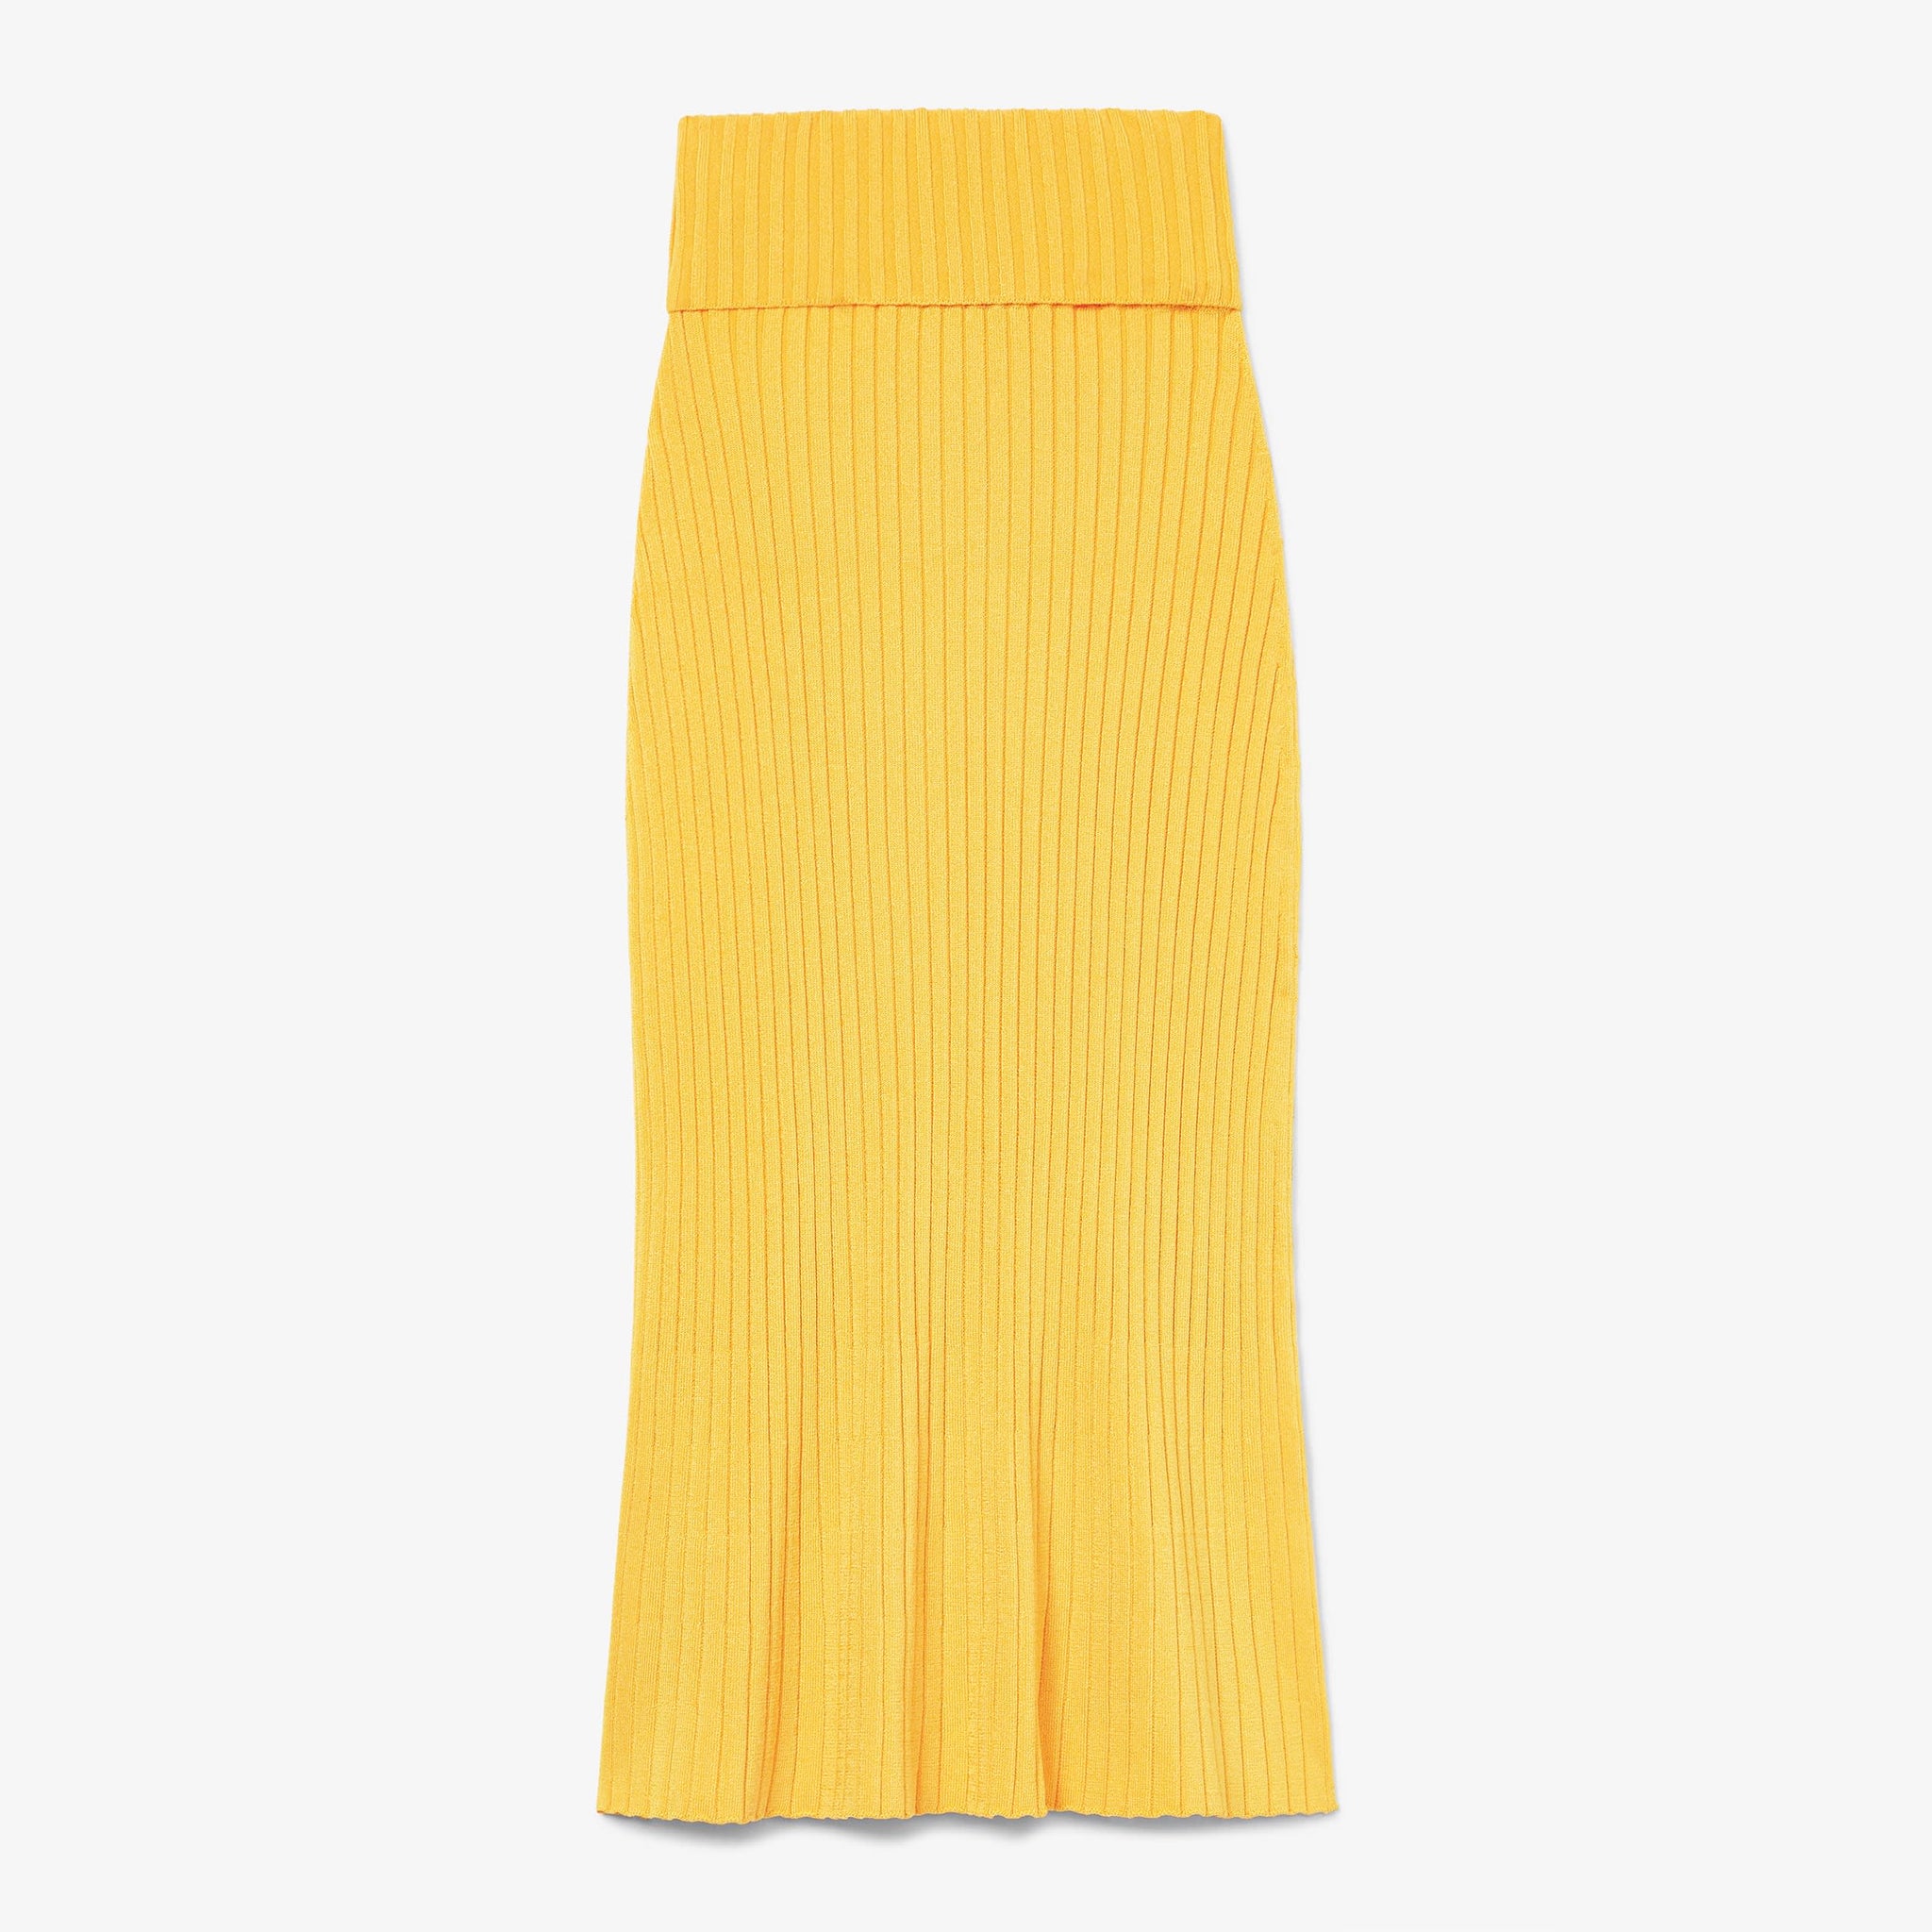 Packshot image of the York Skirt in Tuscan Yellow